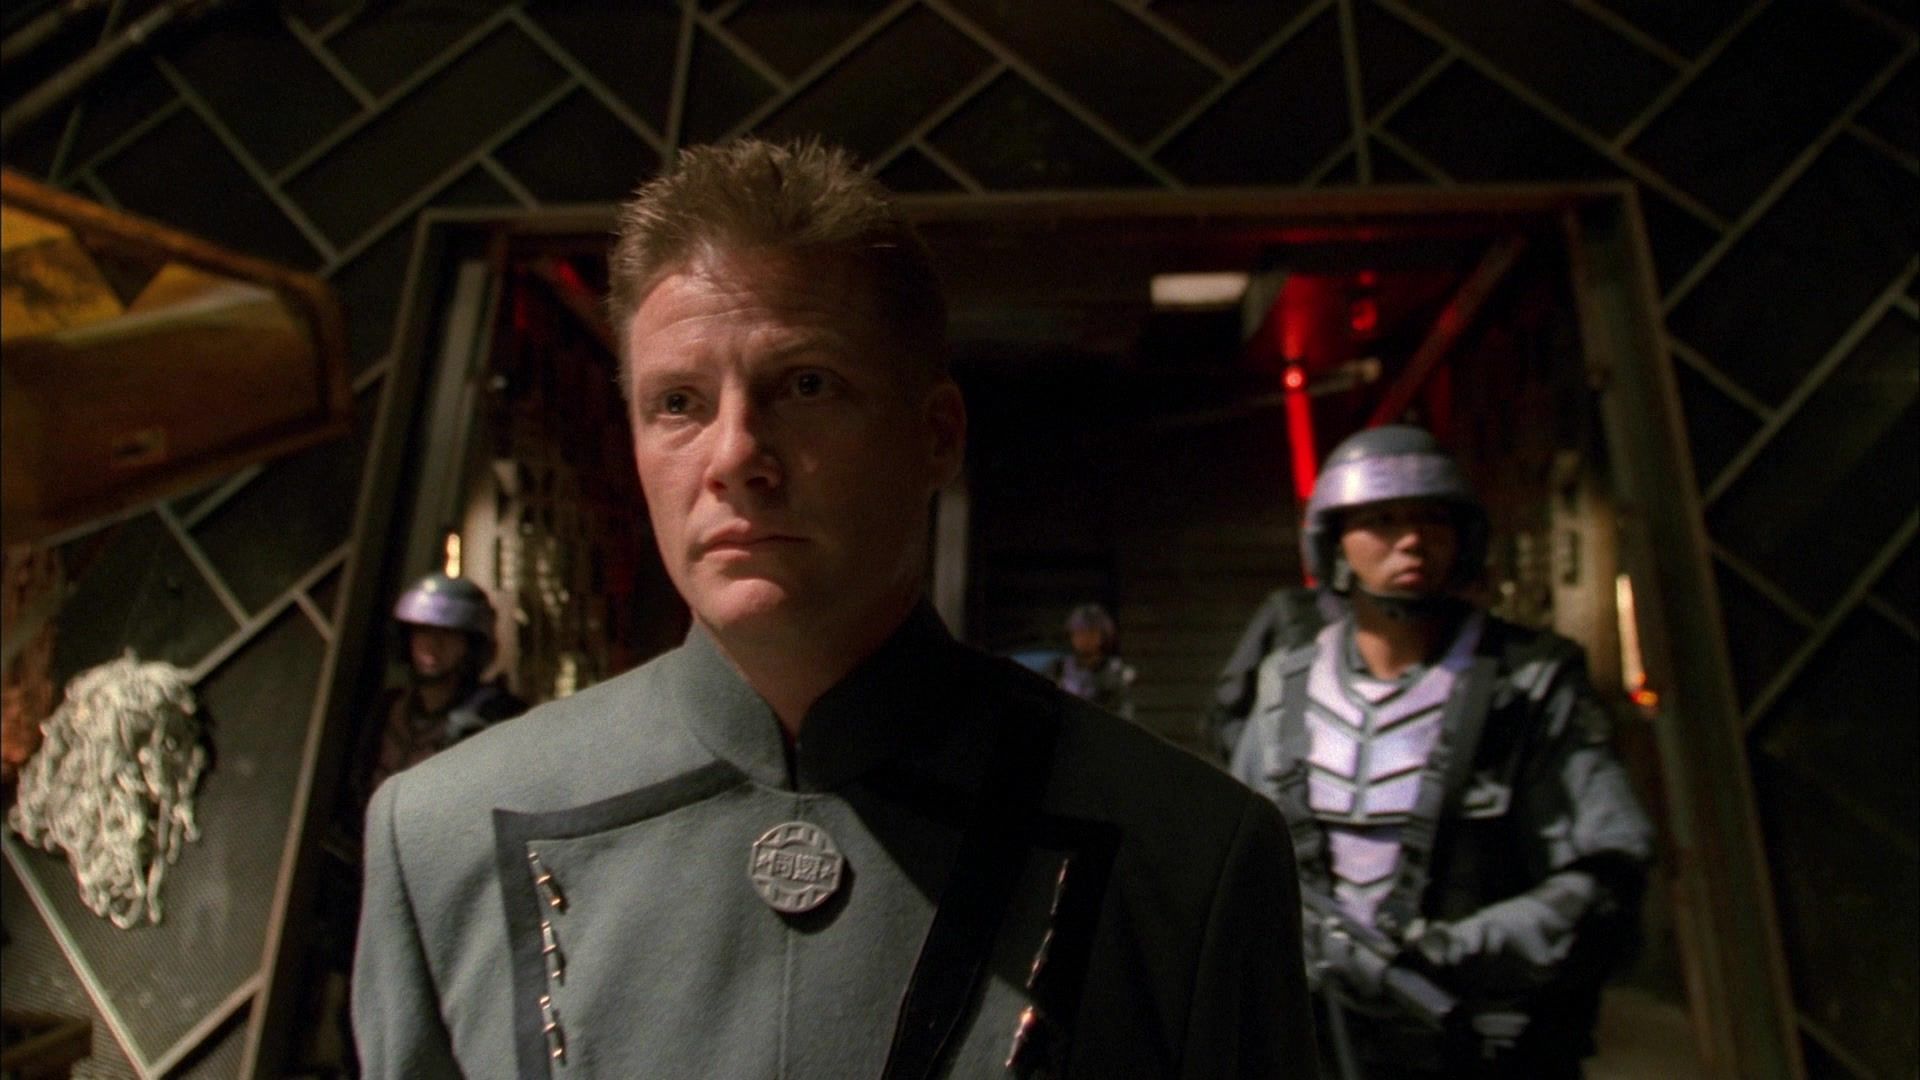 The uniformed Commander Harken (Doug Savant) flanked by soldiers.